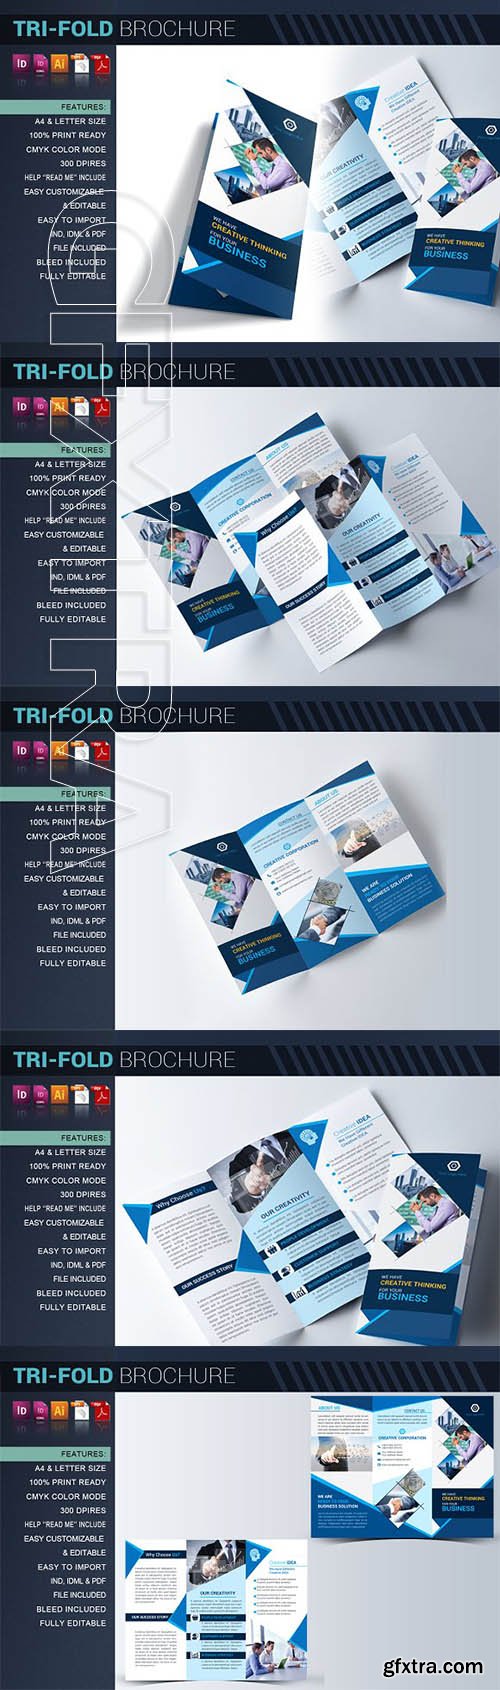 CreativeMarket - Tri-fold Brochure 2508312